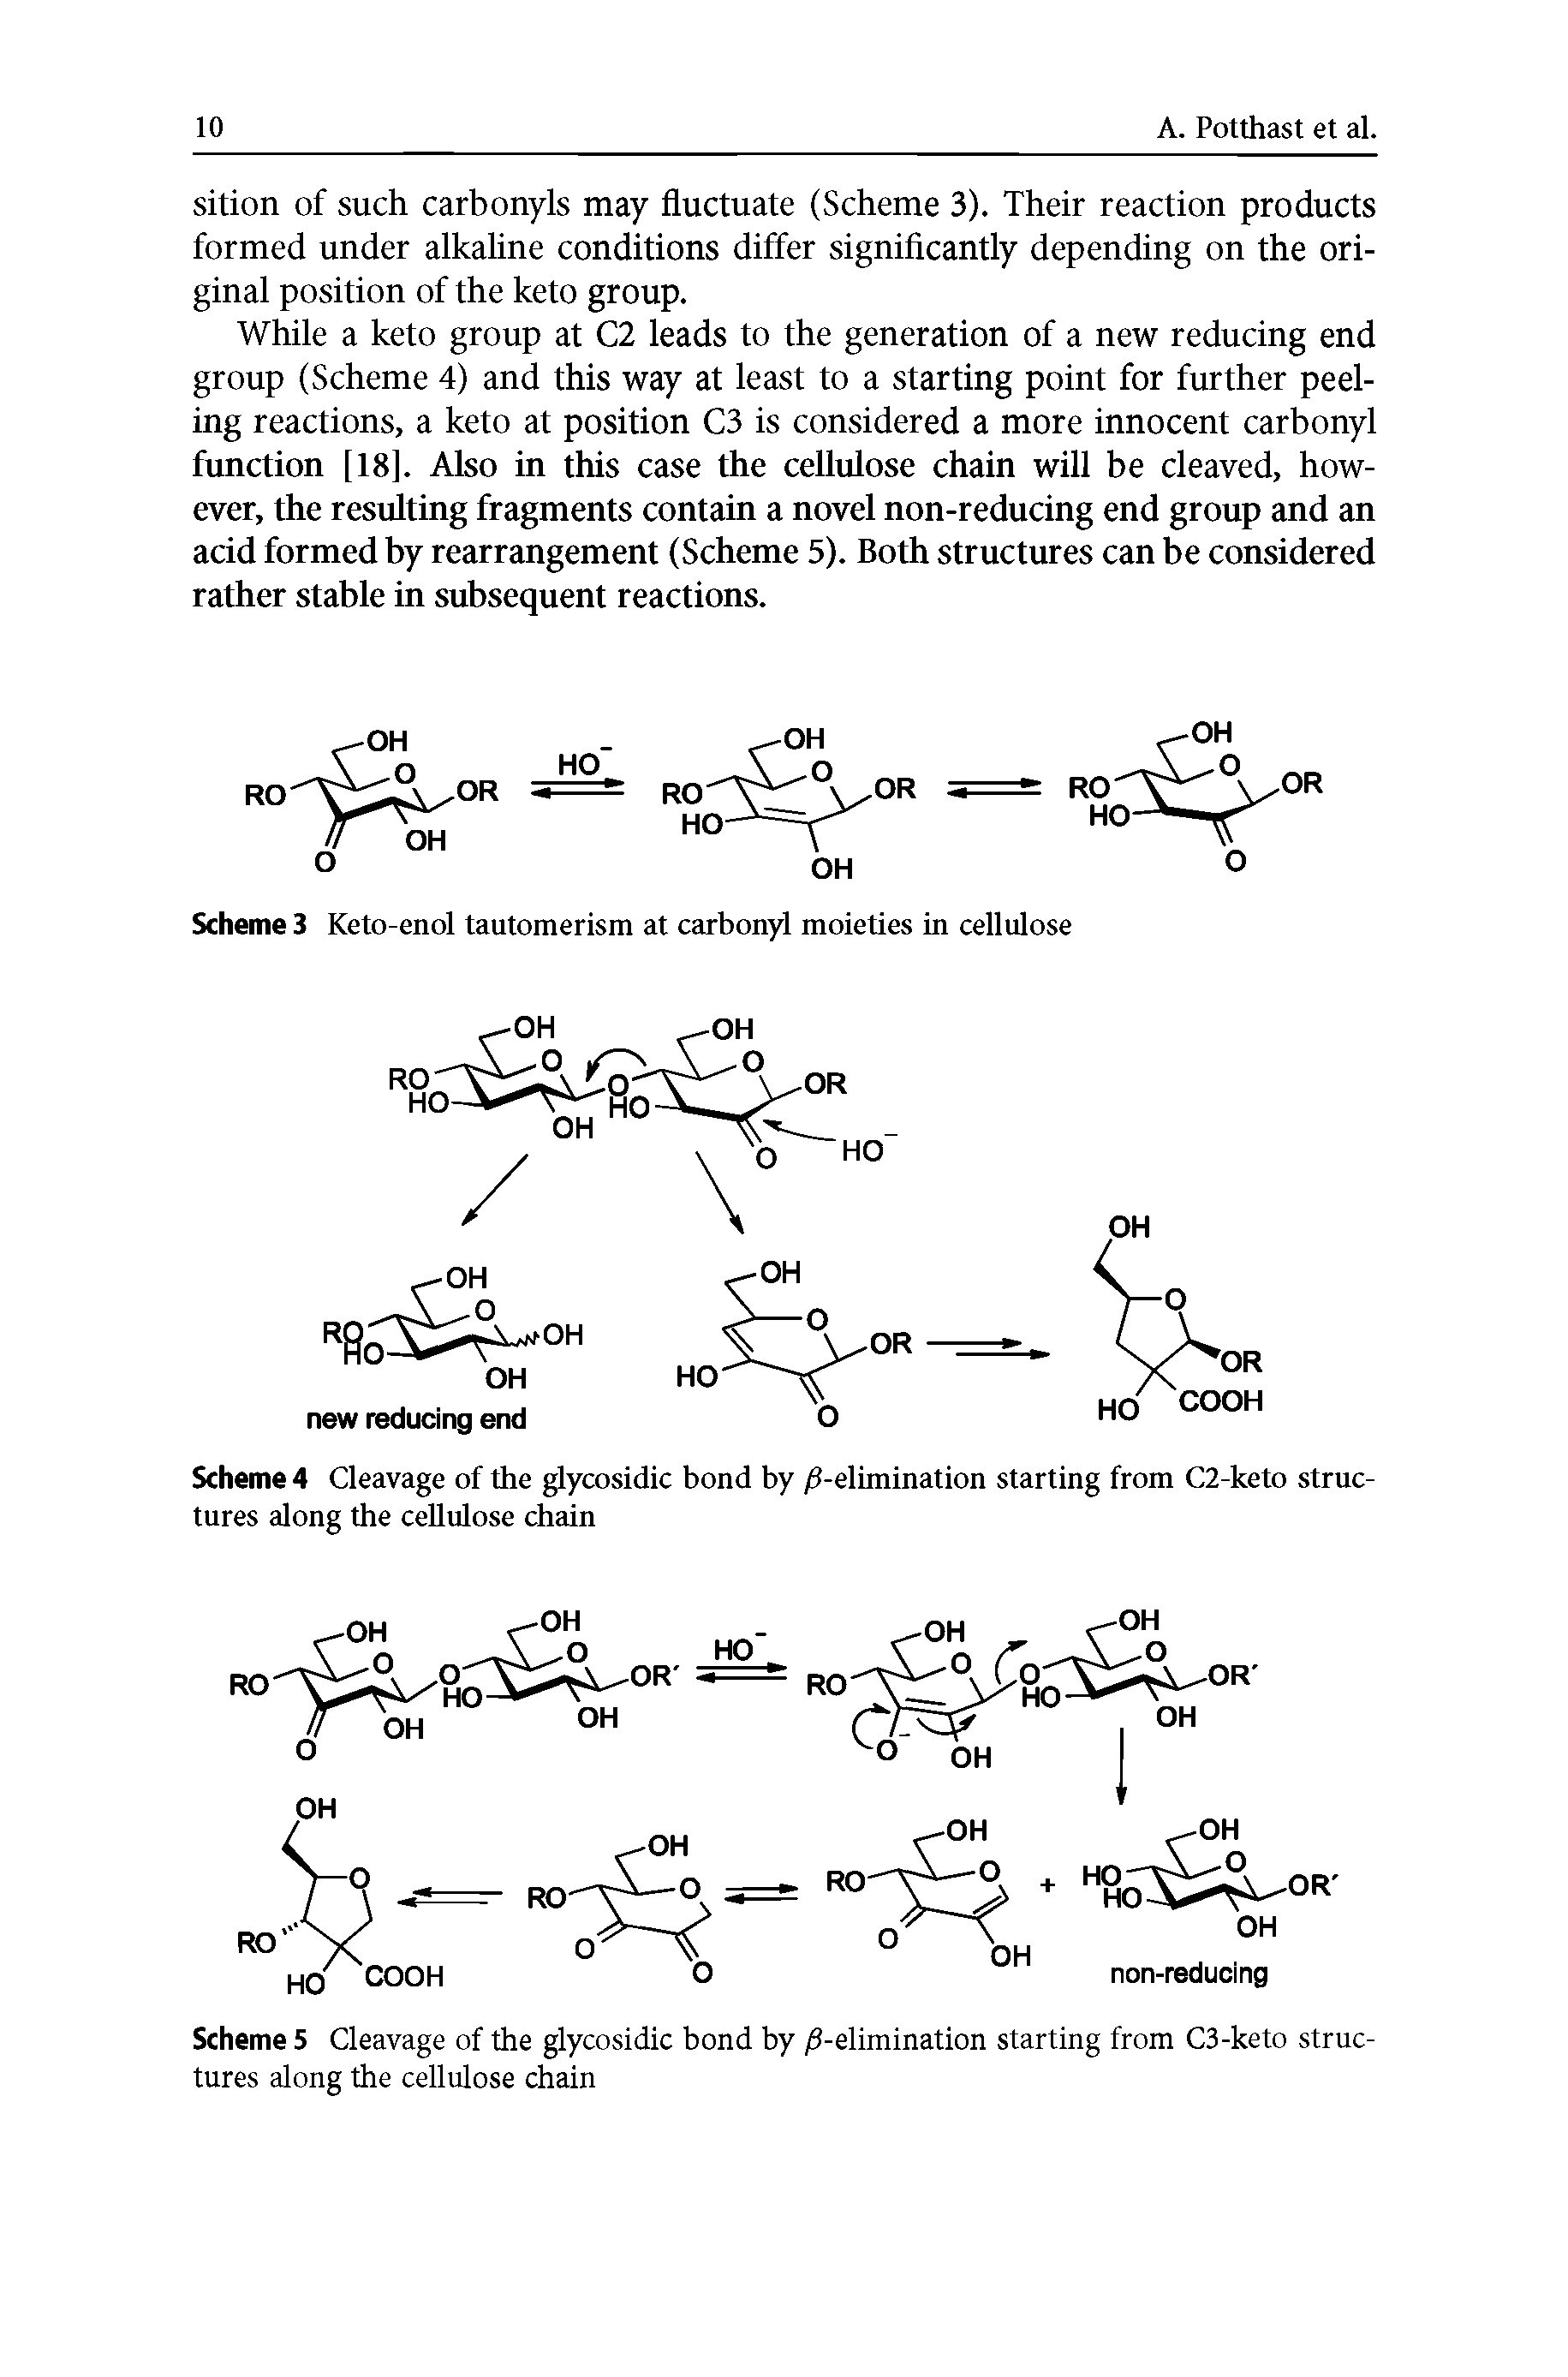 Scheme 3 Keto-enol tautomerism at carbonyl moieties in cellulose...